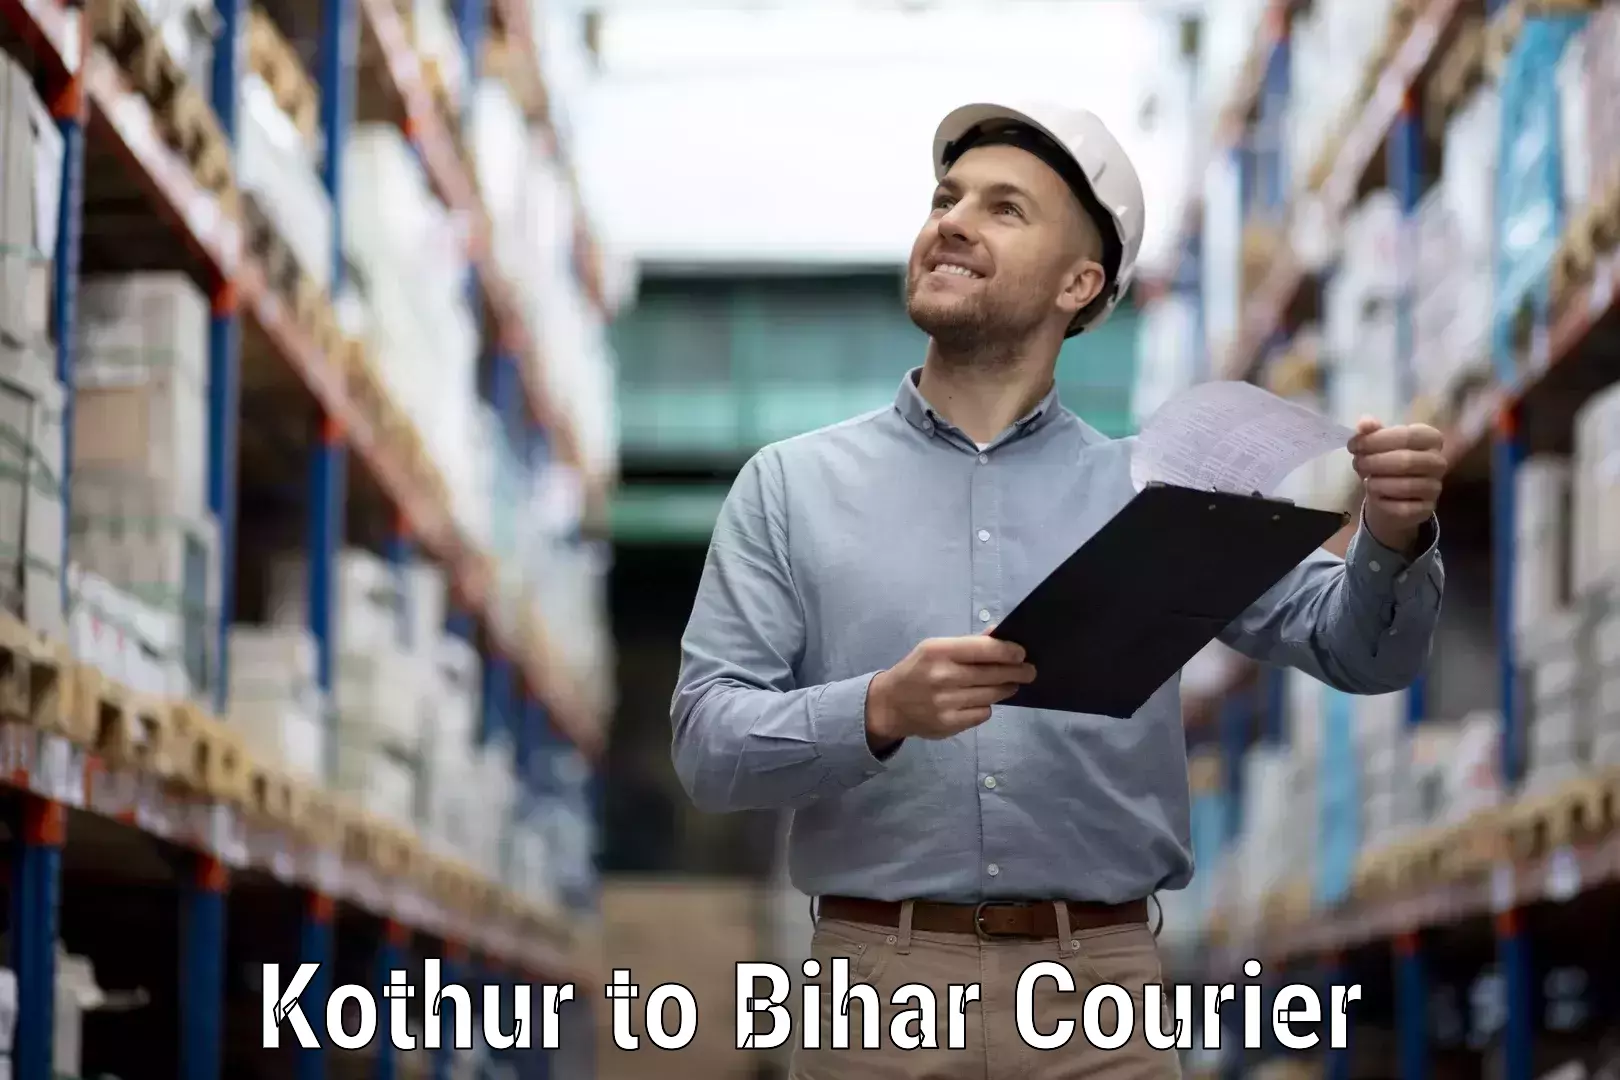 Courier service comparison in Kothur to Maharajganj Vaishali